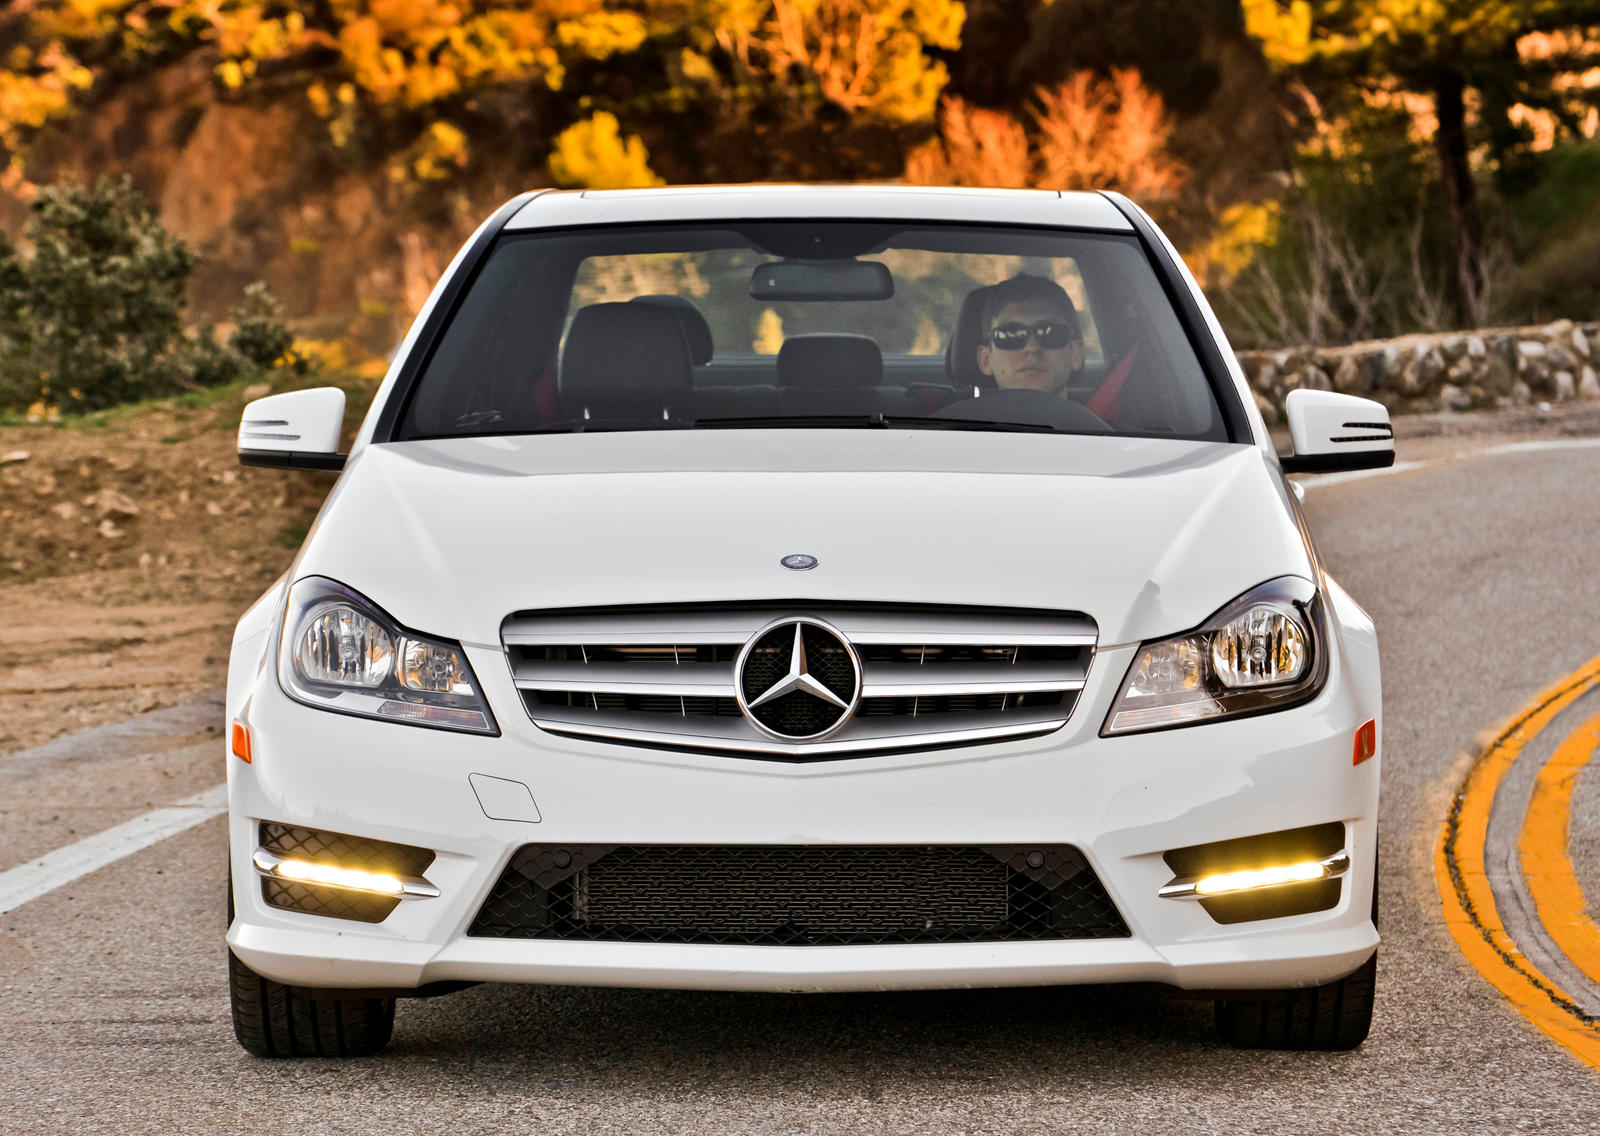 2012 Mercedes-Benz C-Class Sedan Front View Driving